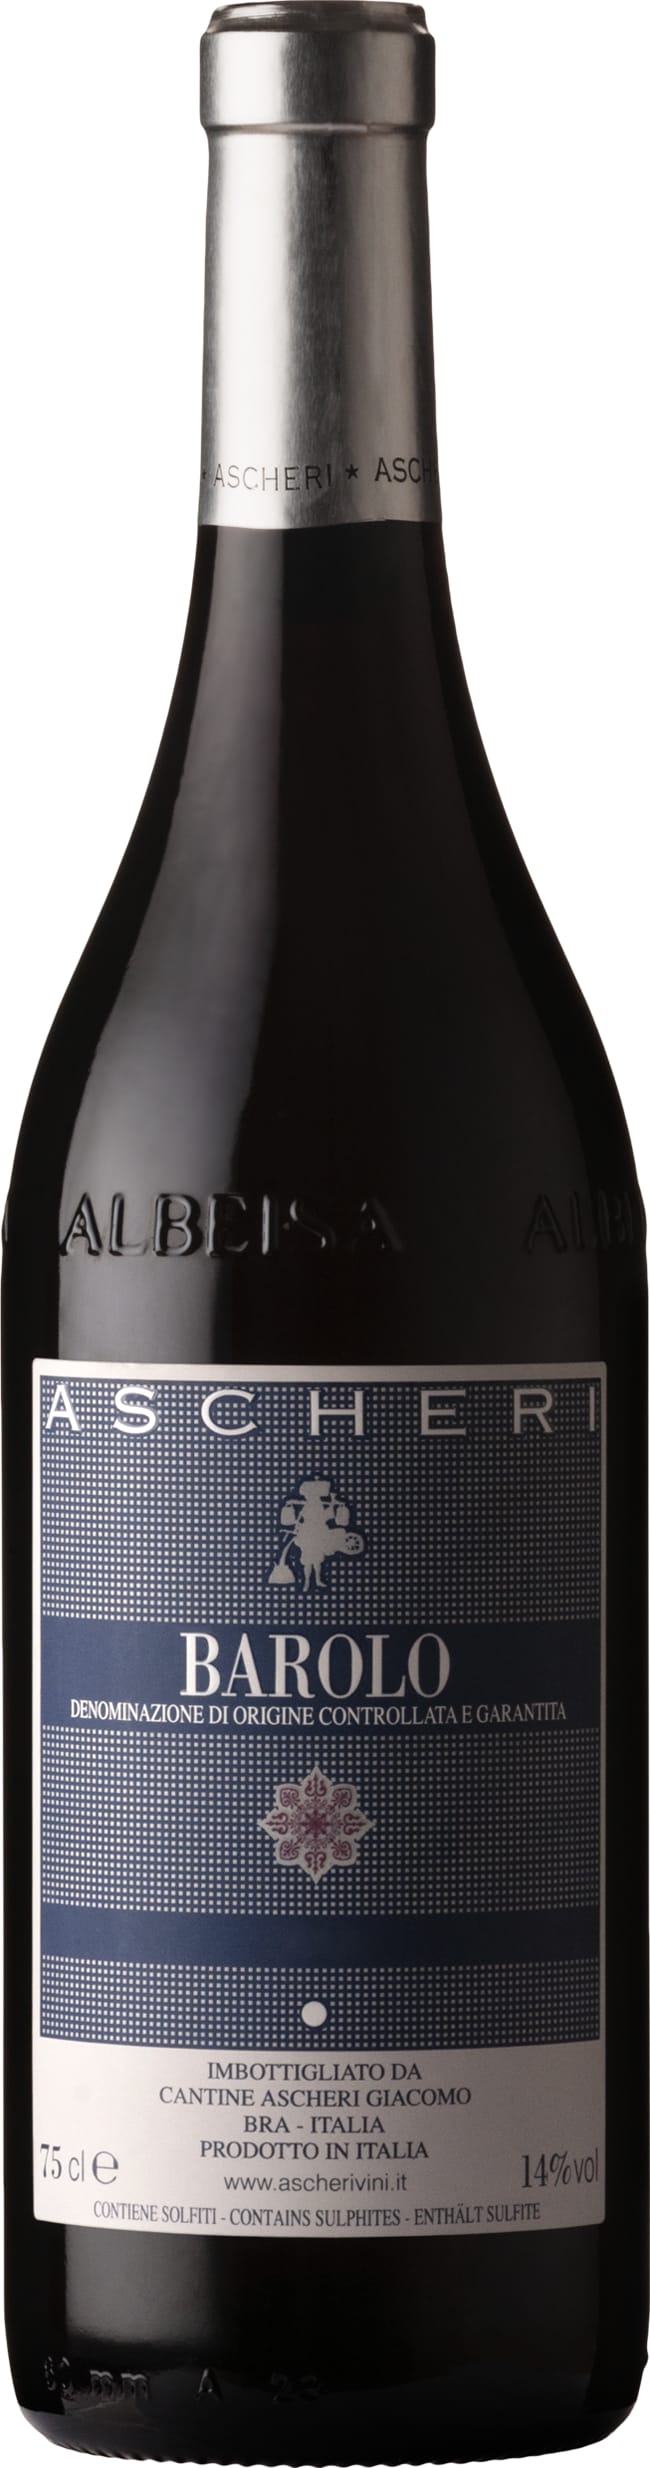 Ascheri Barolo DOCG 2020 75cl - Buy Ascheri Wines from GREAT WINES DIRECT wine shop